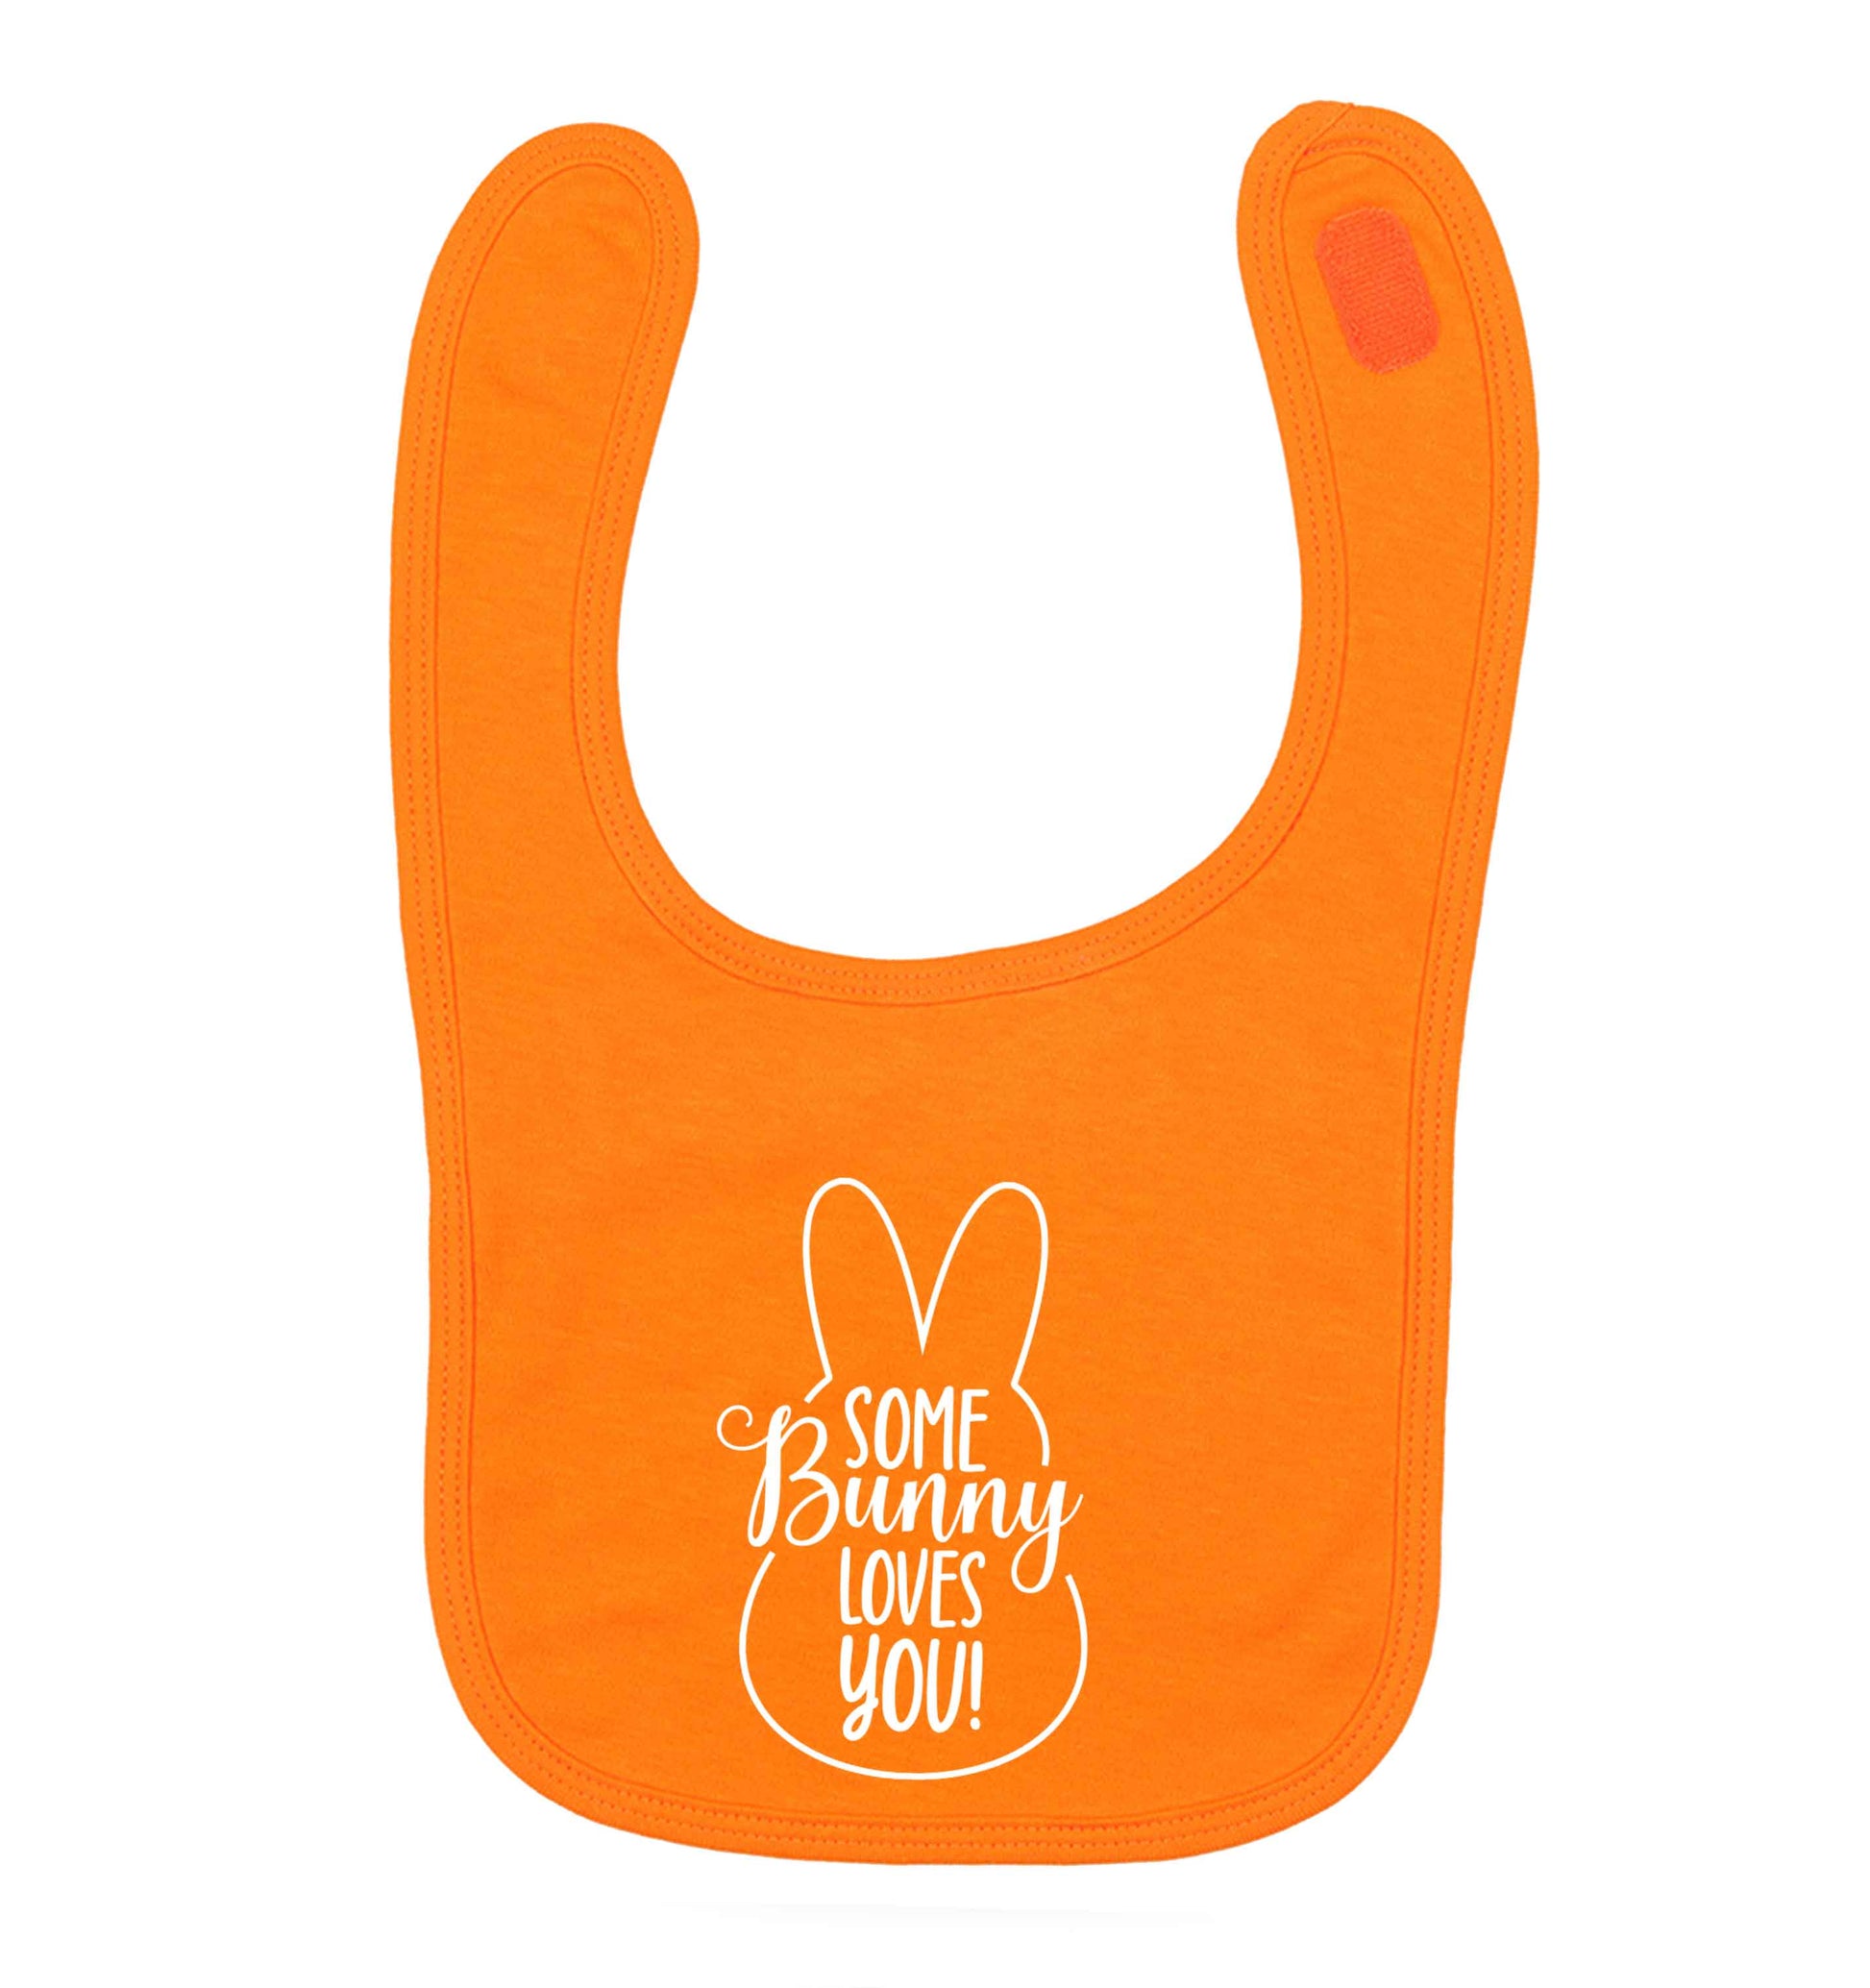 Some bunny loves you orange baby bib